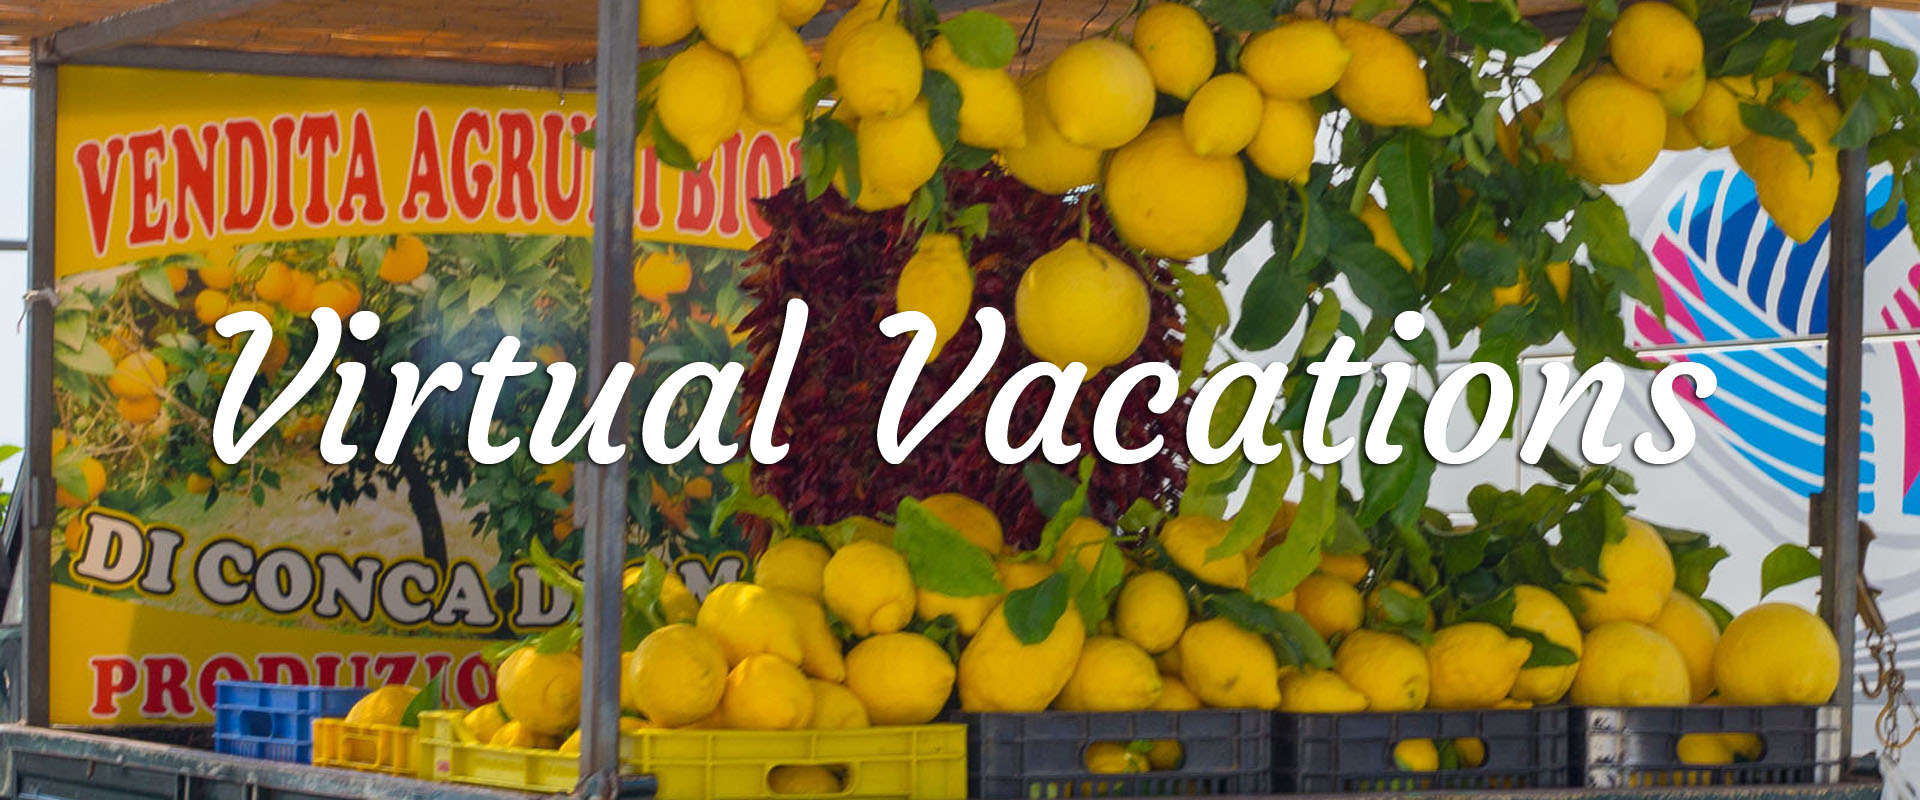 Virtual Vacations - lemon truck photo